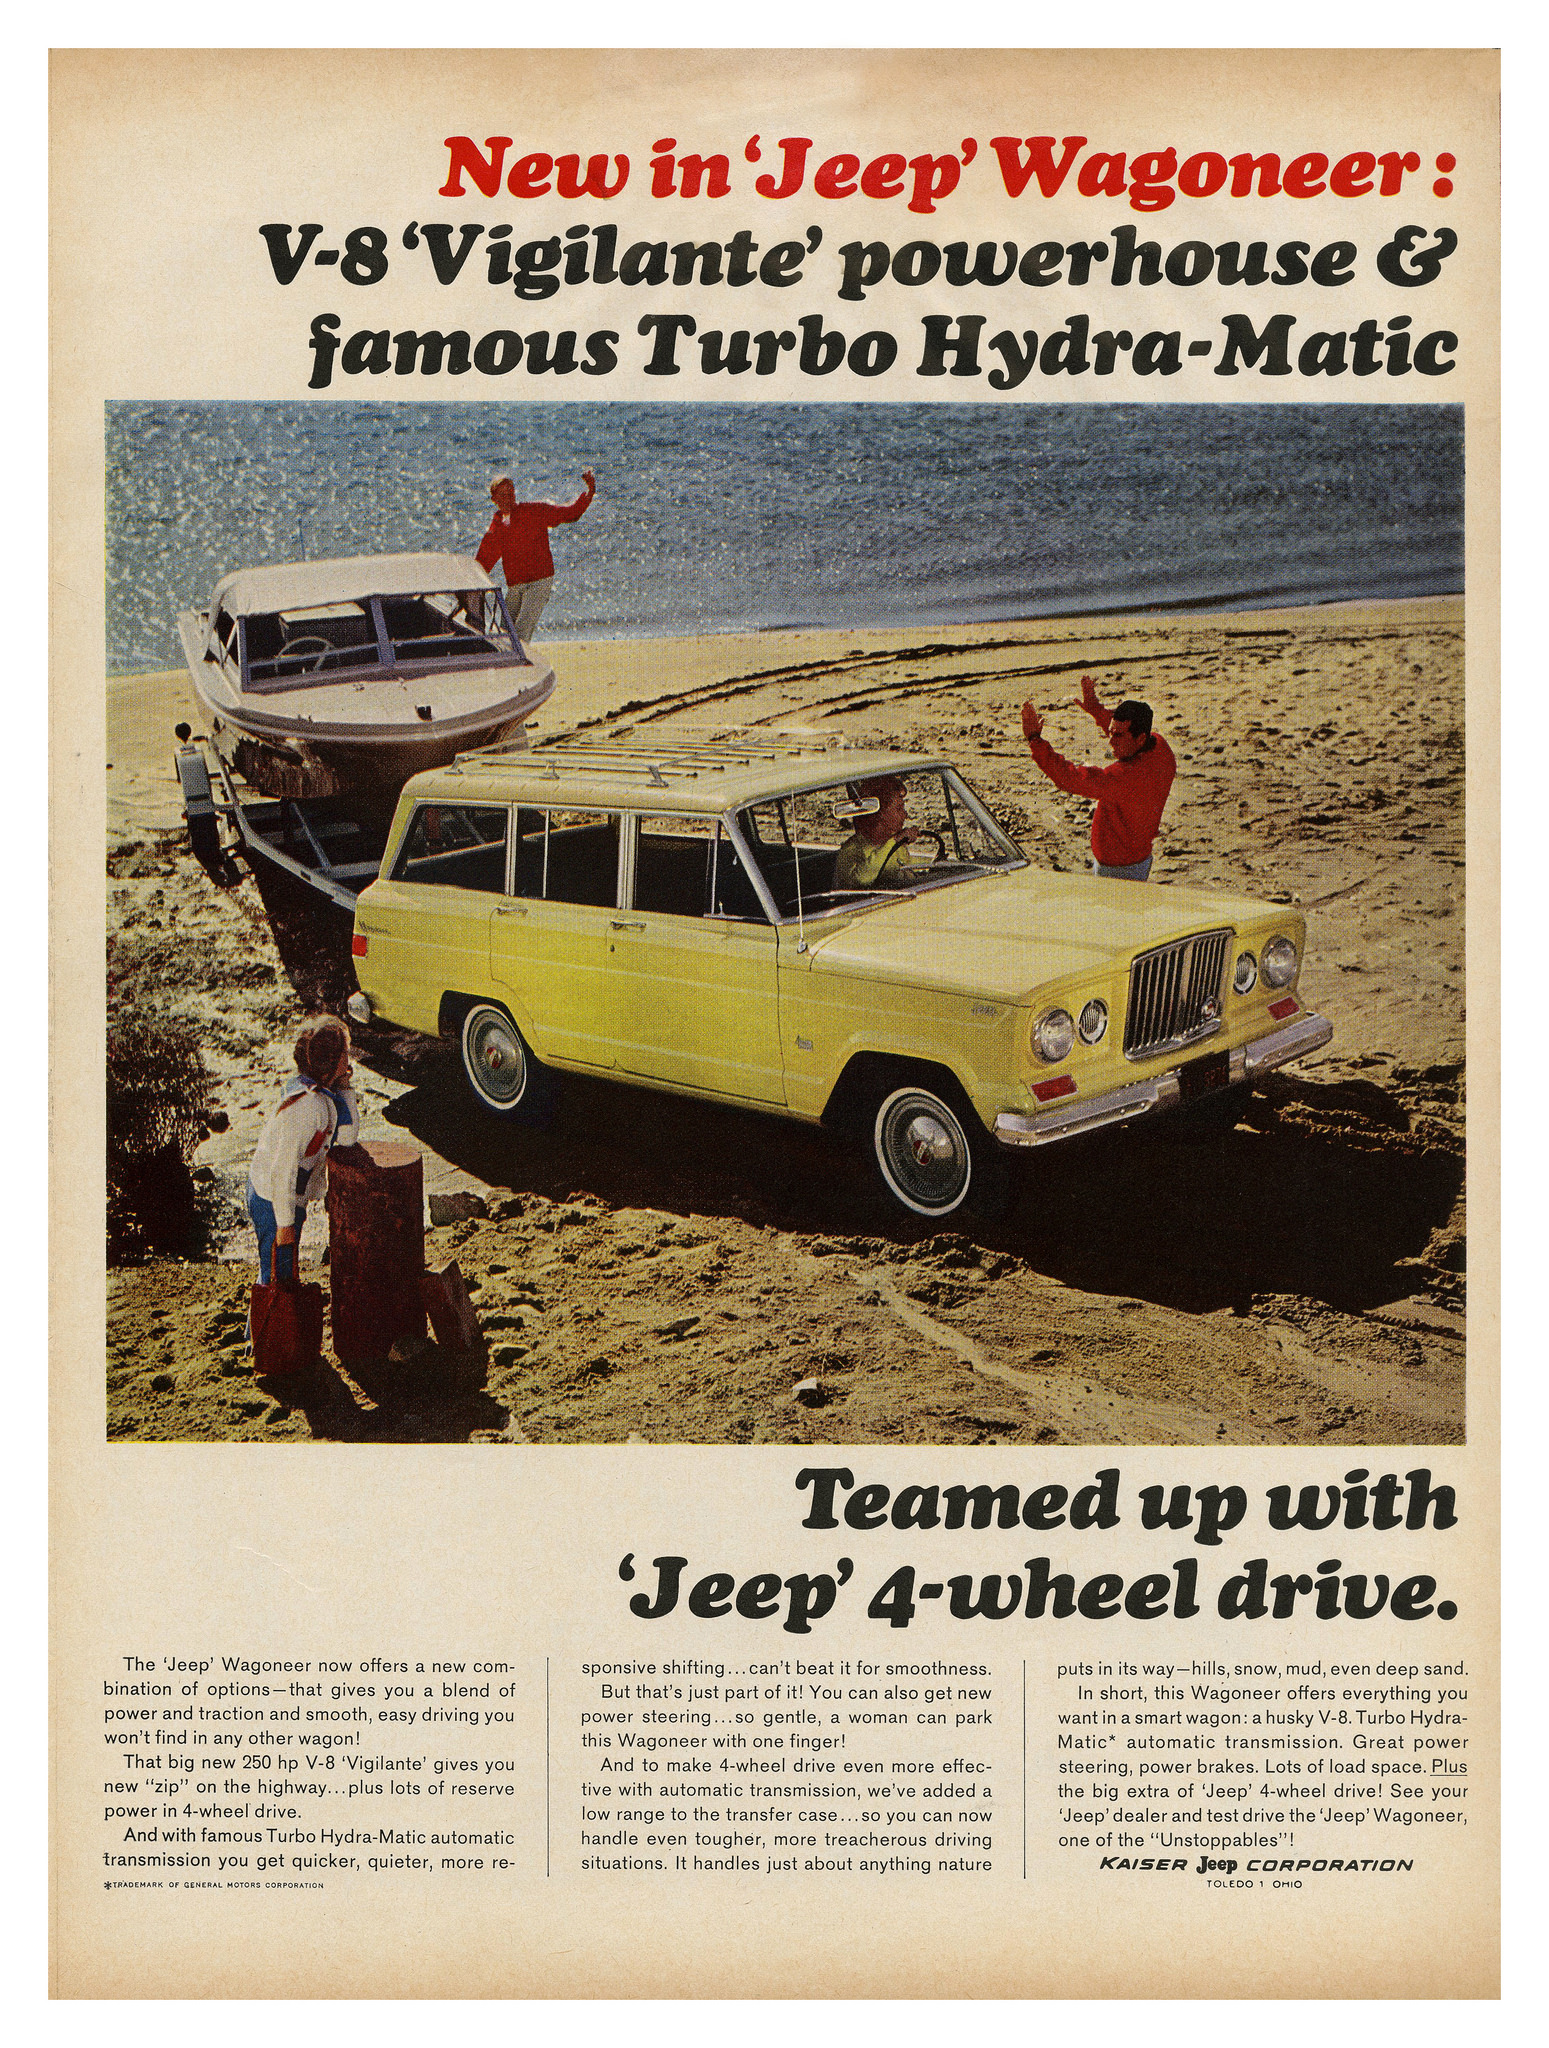 1974 Jeep Wagoneer The Ultimate 4 Wheel Drive-Original Print Ad 8.5 x 11" 